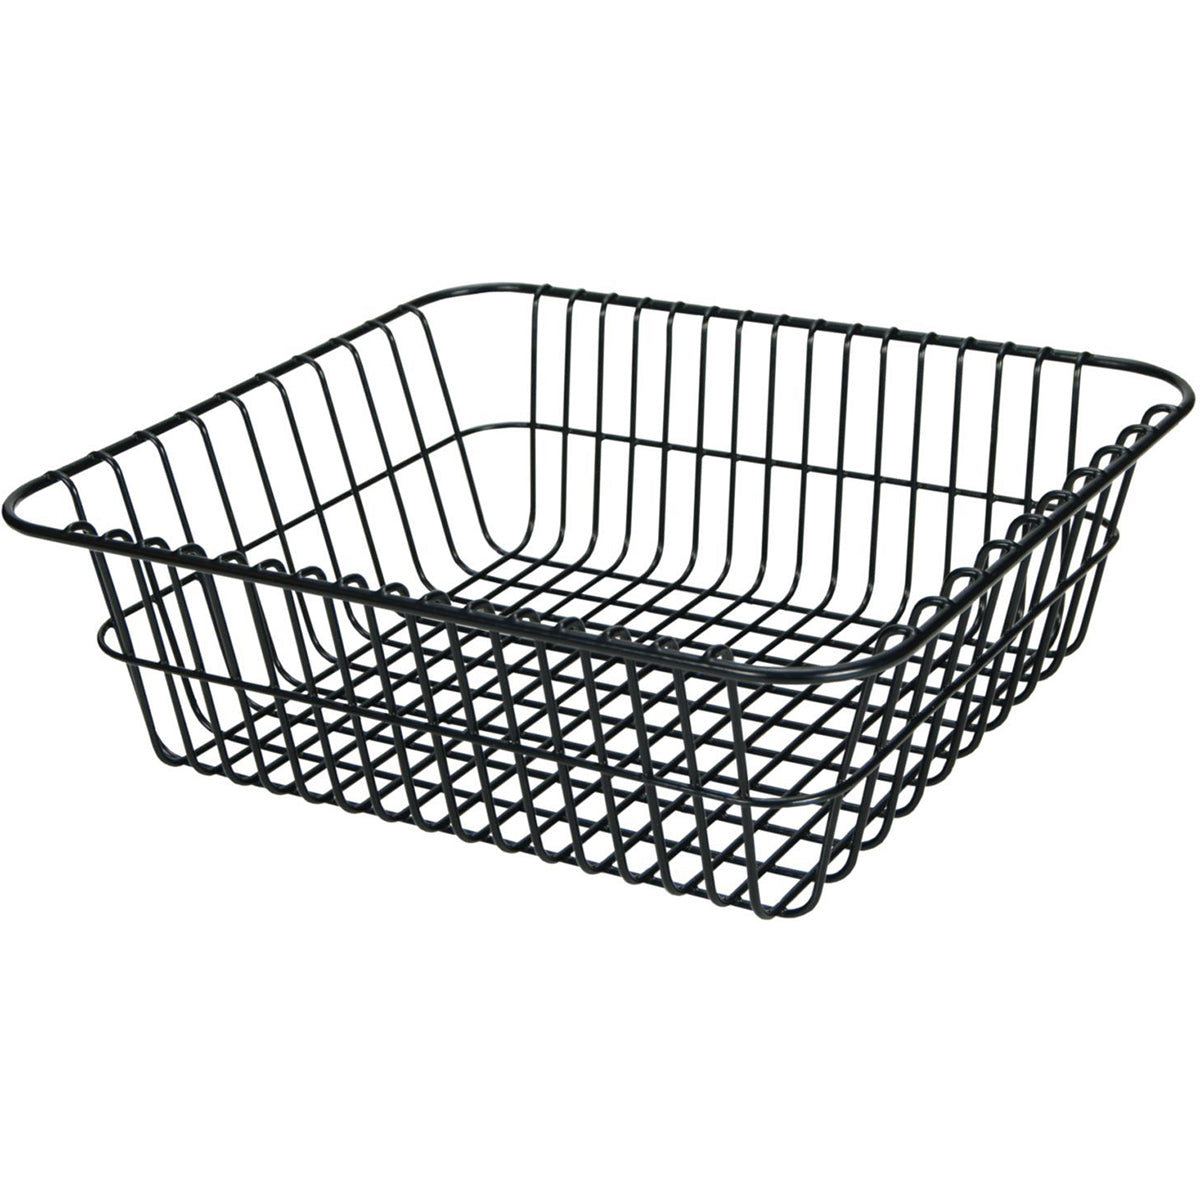 IGLOO Wire Basket for 90 qt. Rotomold Cooler - Black IGLOO